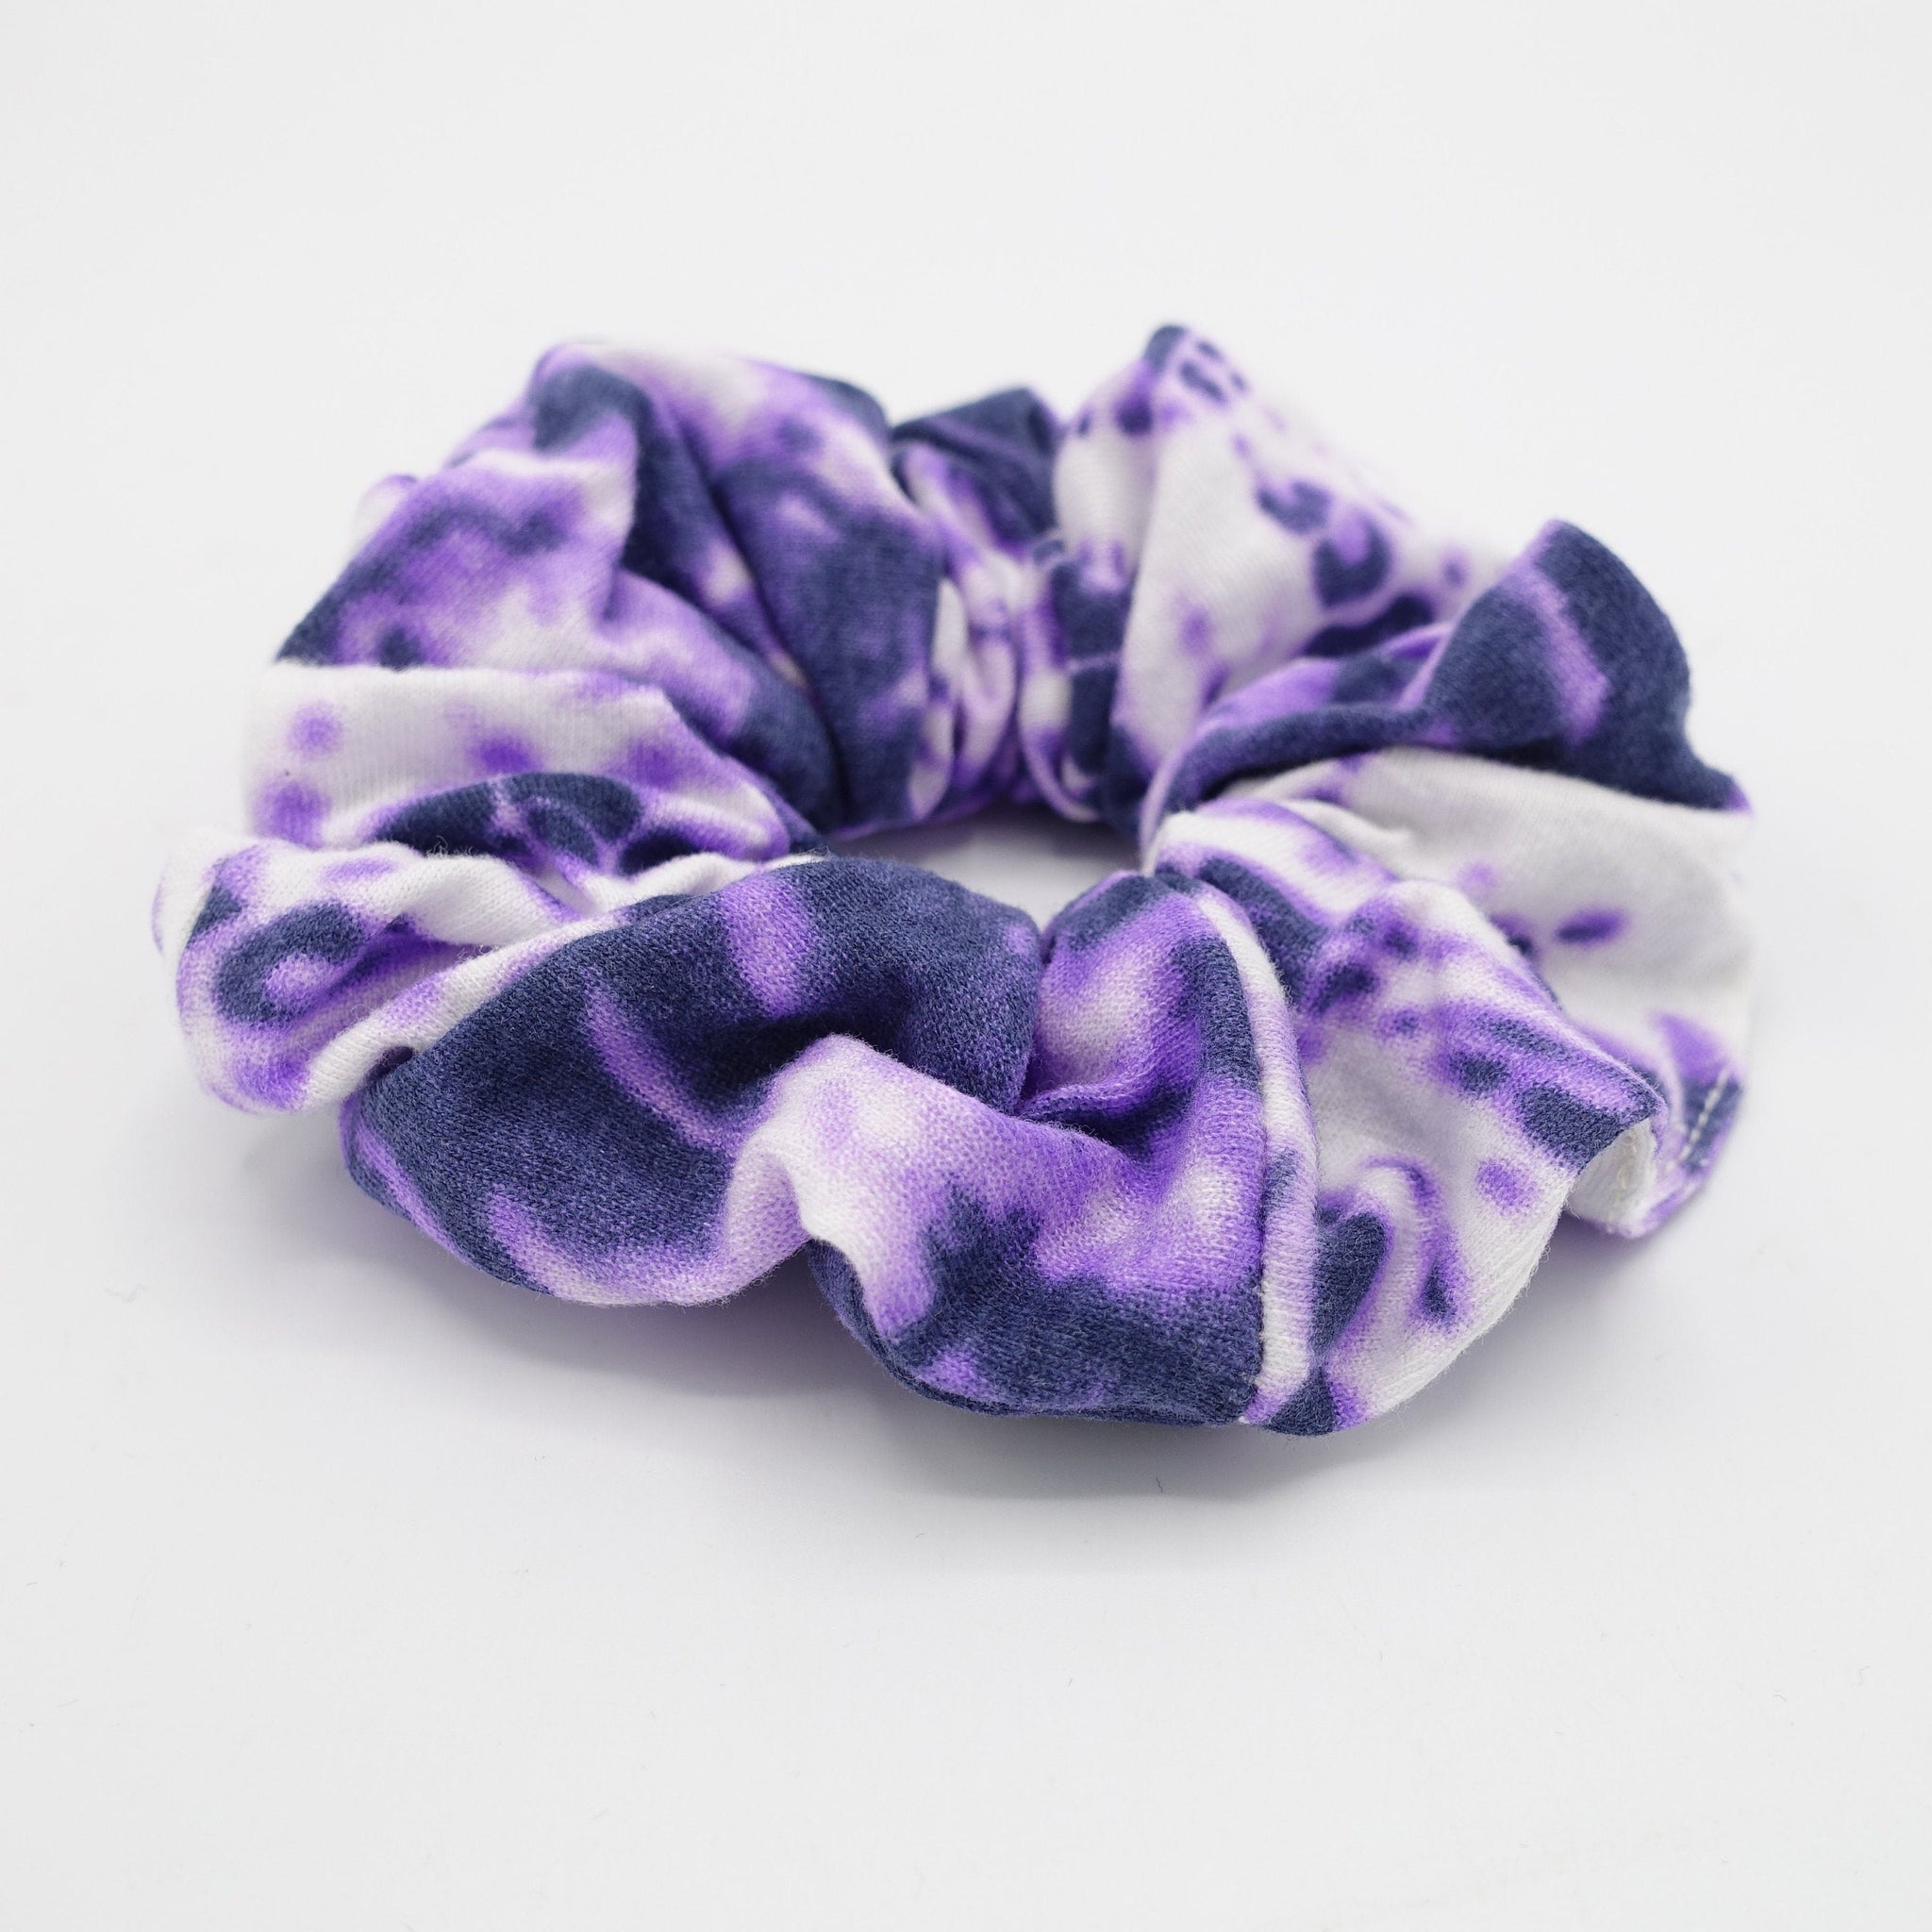 veryshine.com cotton tie dye scrunchies casual scrunchie hair tie for women